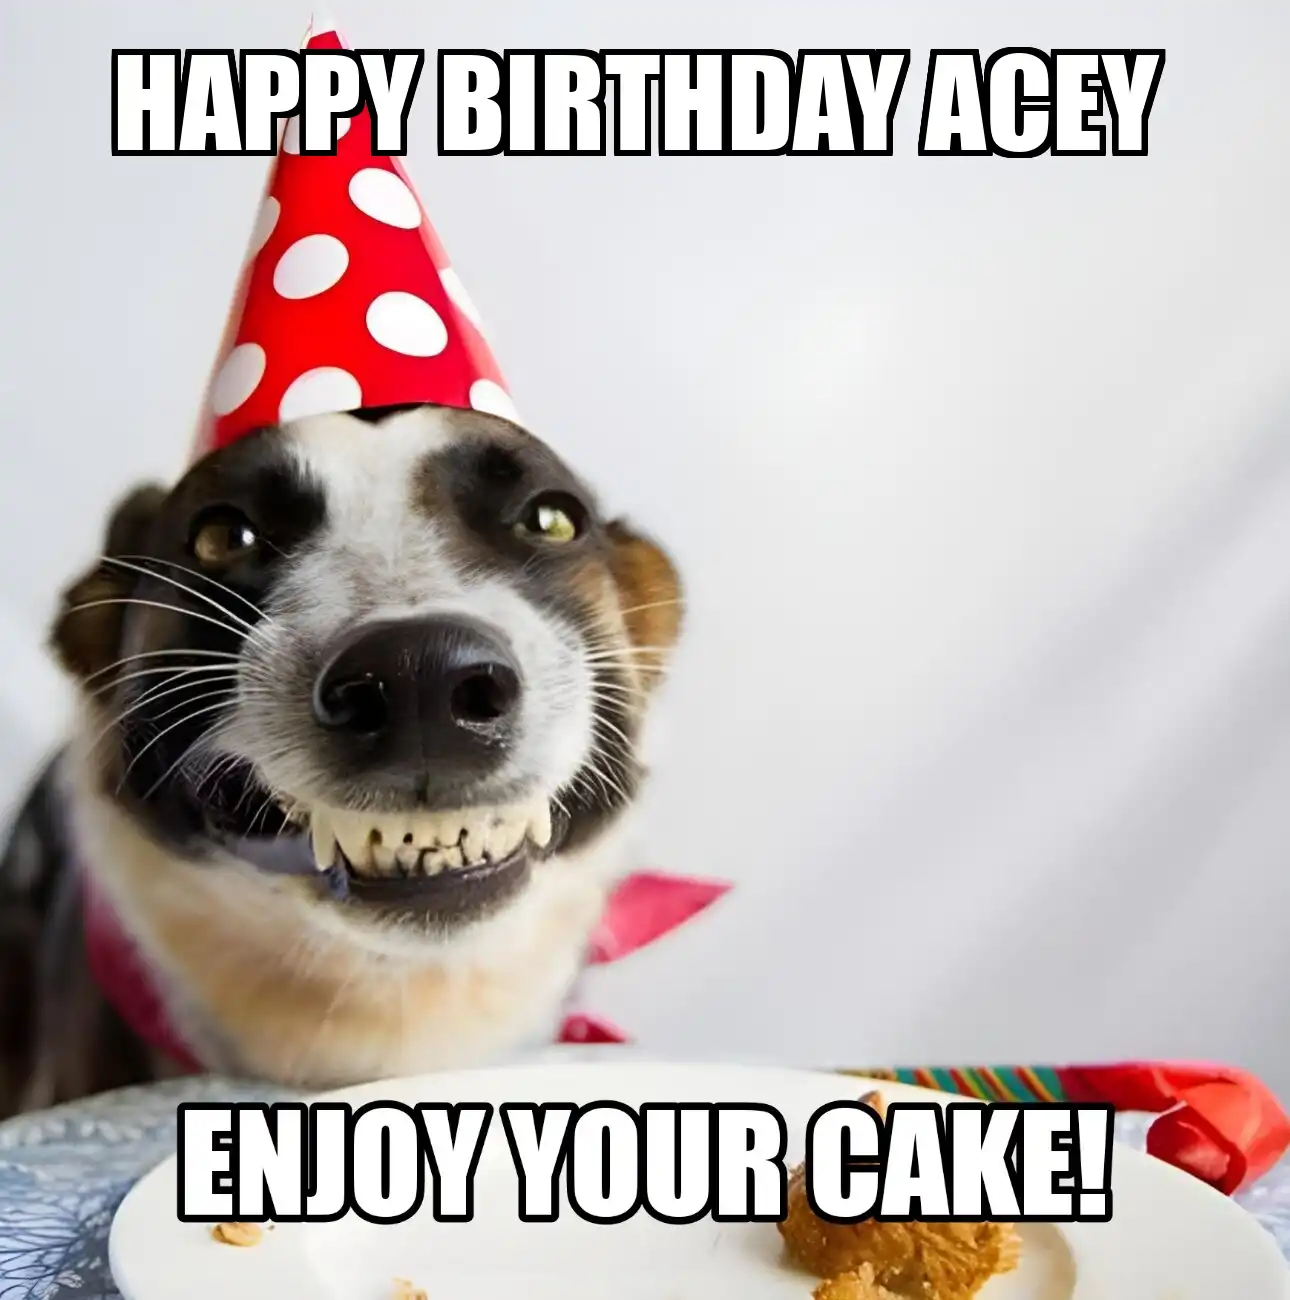 Happy Birthday Acey Enjoy Your Cake Dog Meme